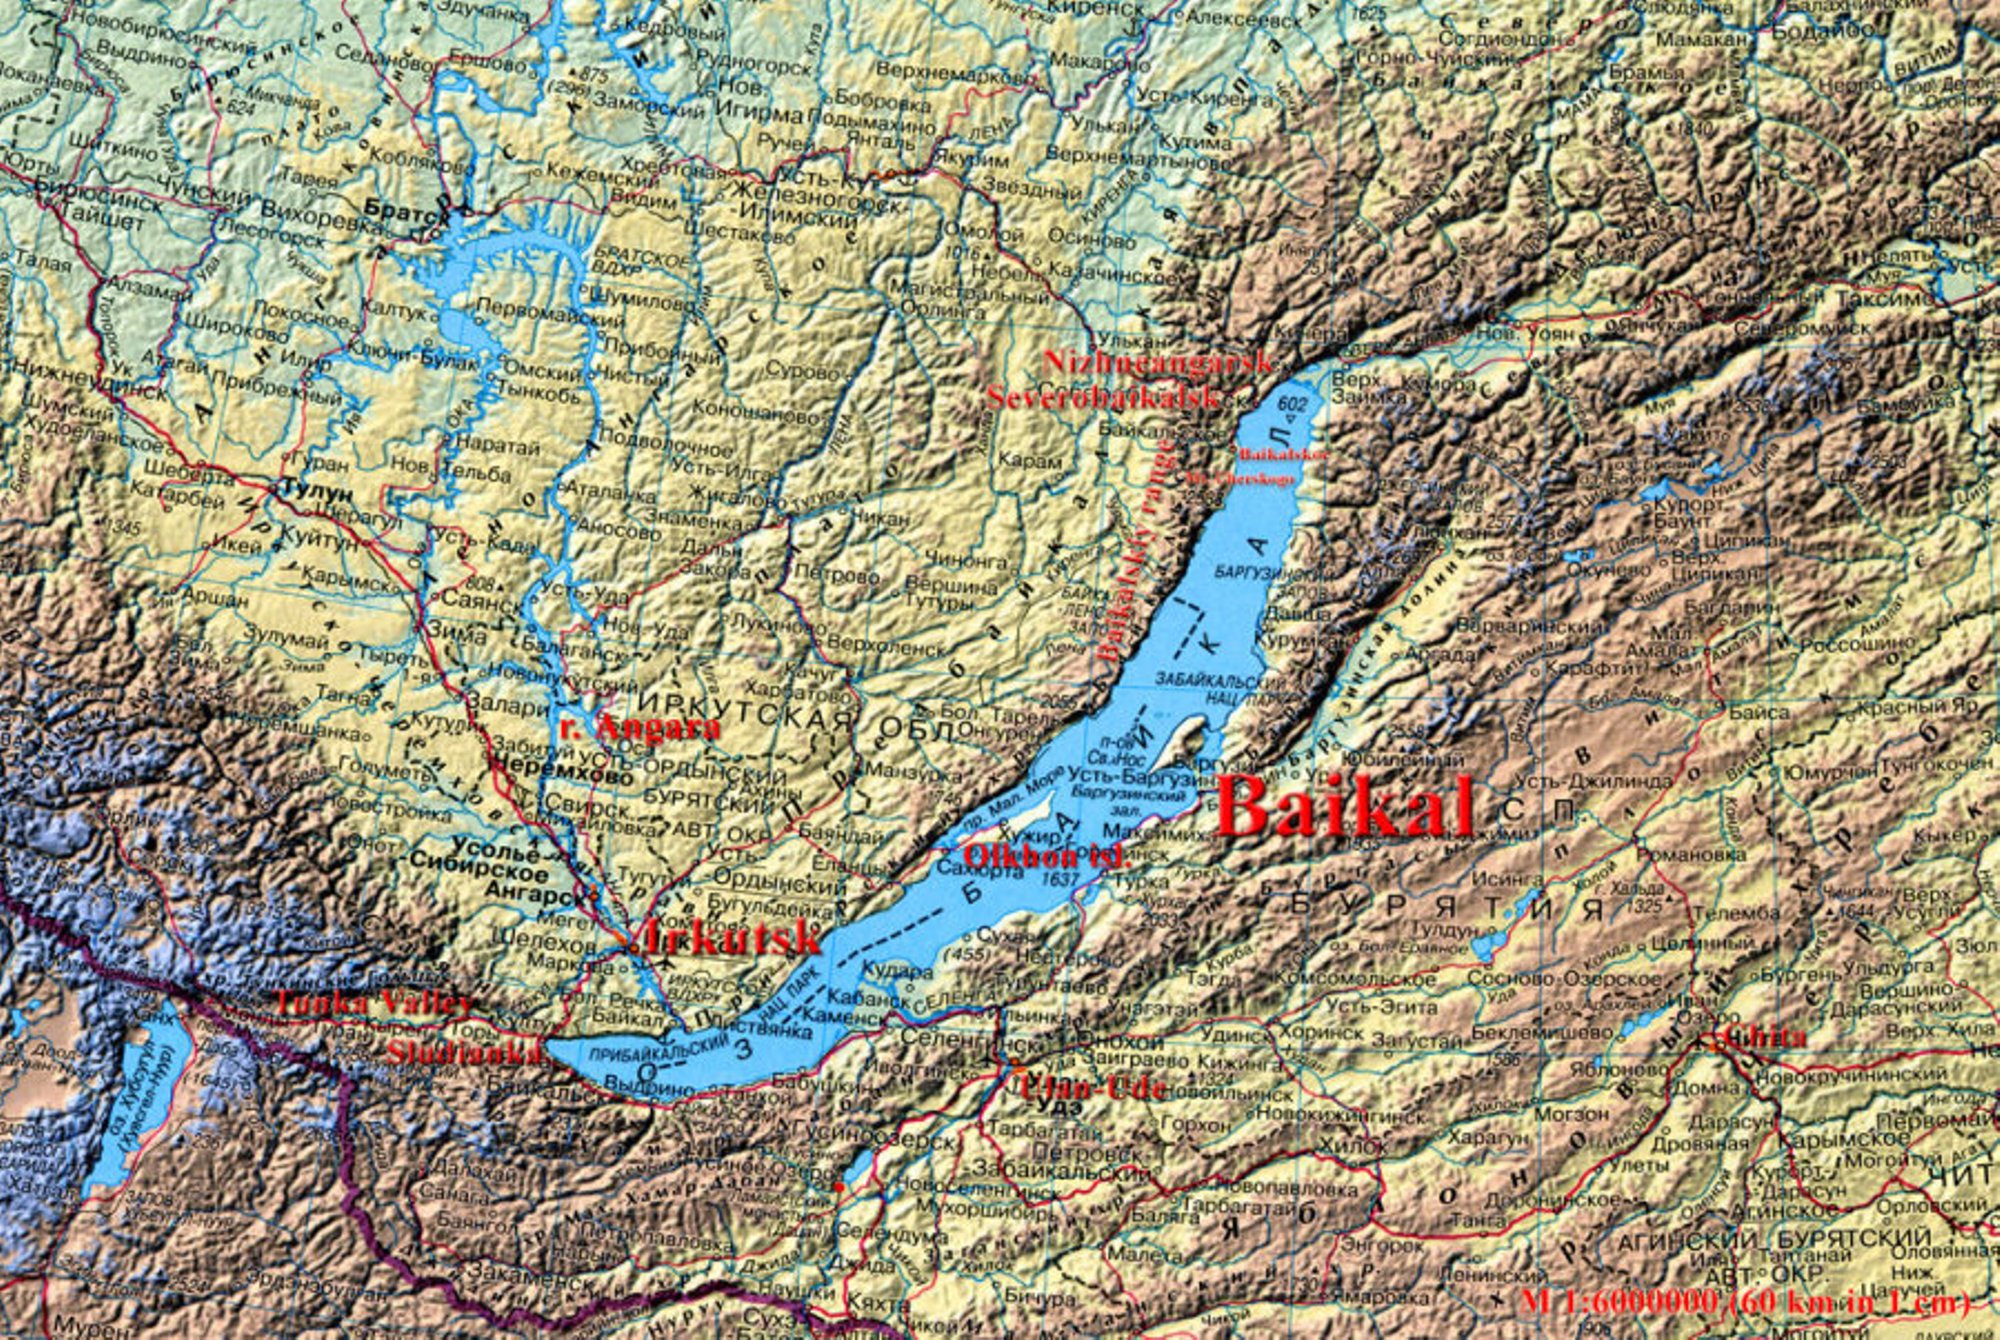 Байкал озеро населенный пункт. Озеро Байкал на карте. Озеро Байкал на карте России. Озеро Байкал карта географическая.